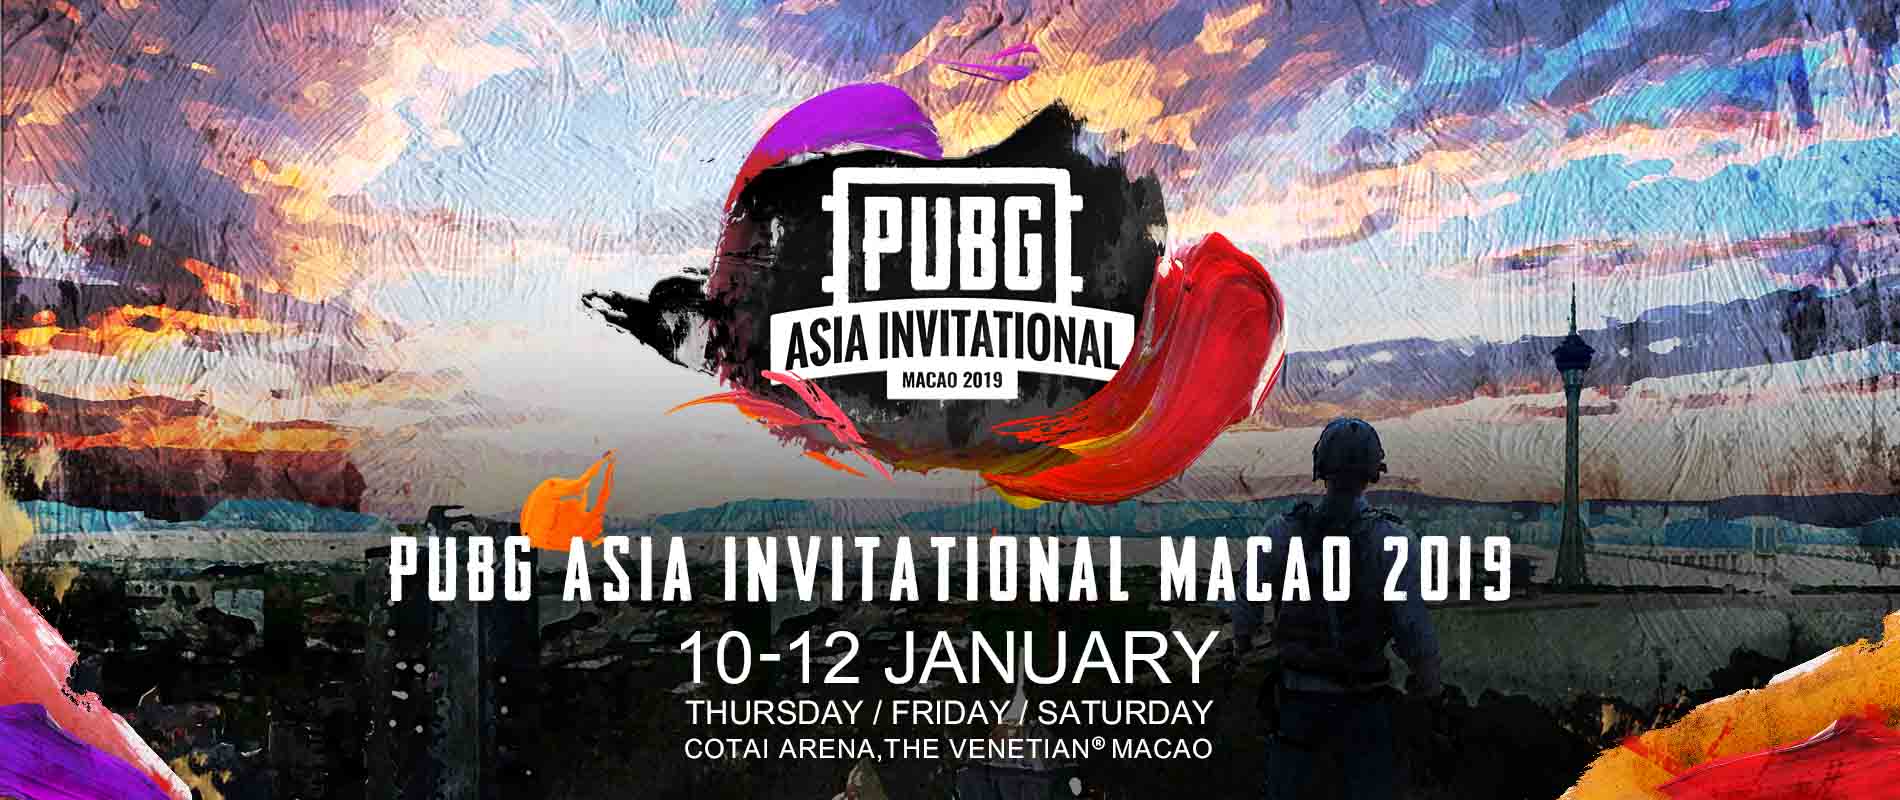 Pubg Asia Invitational Macao 2019 Macau Entertainment The Venetian Macao